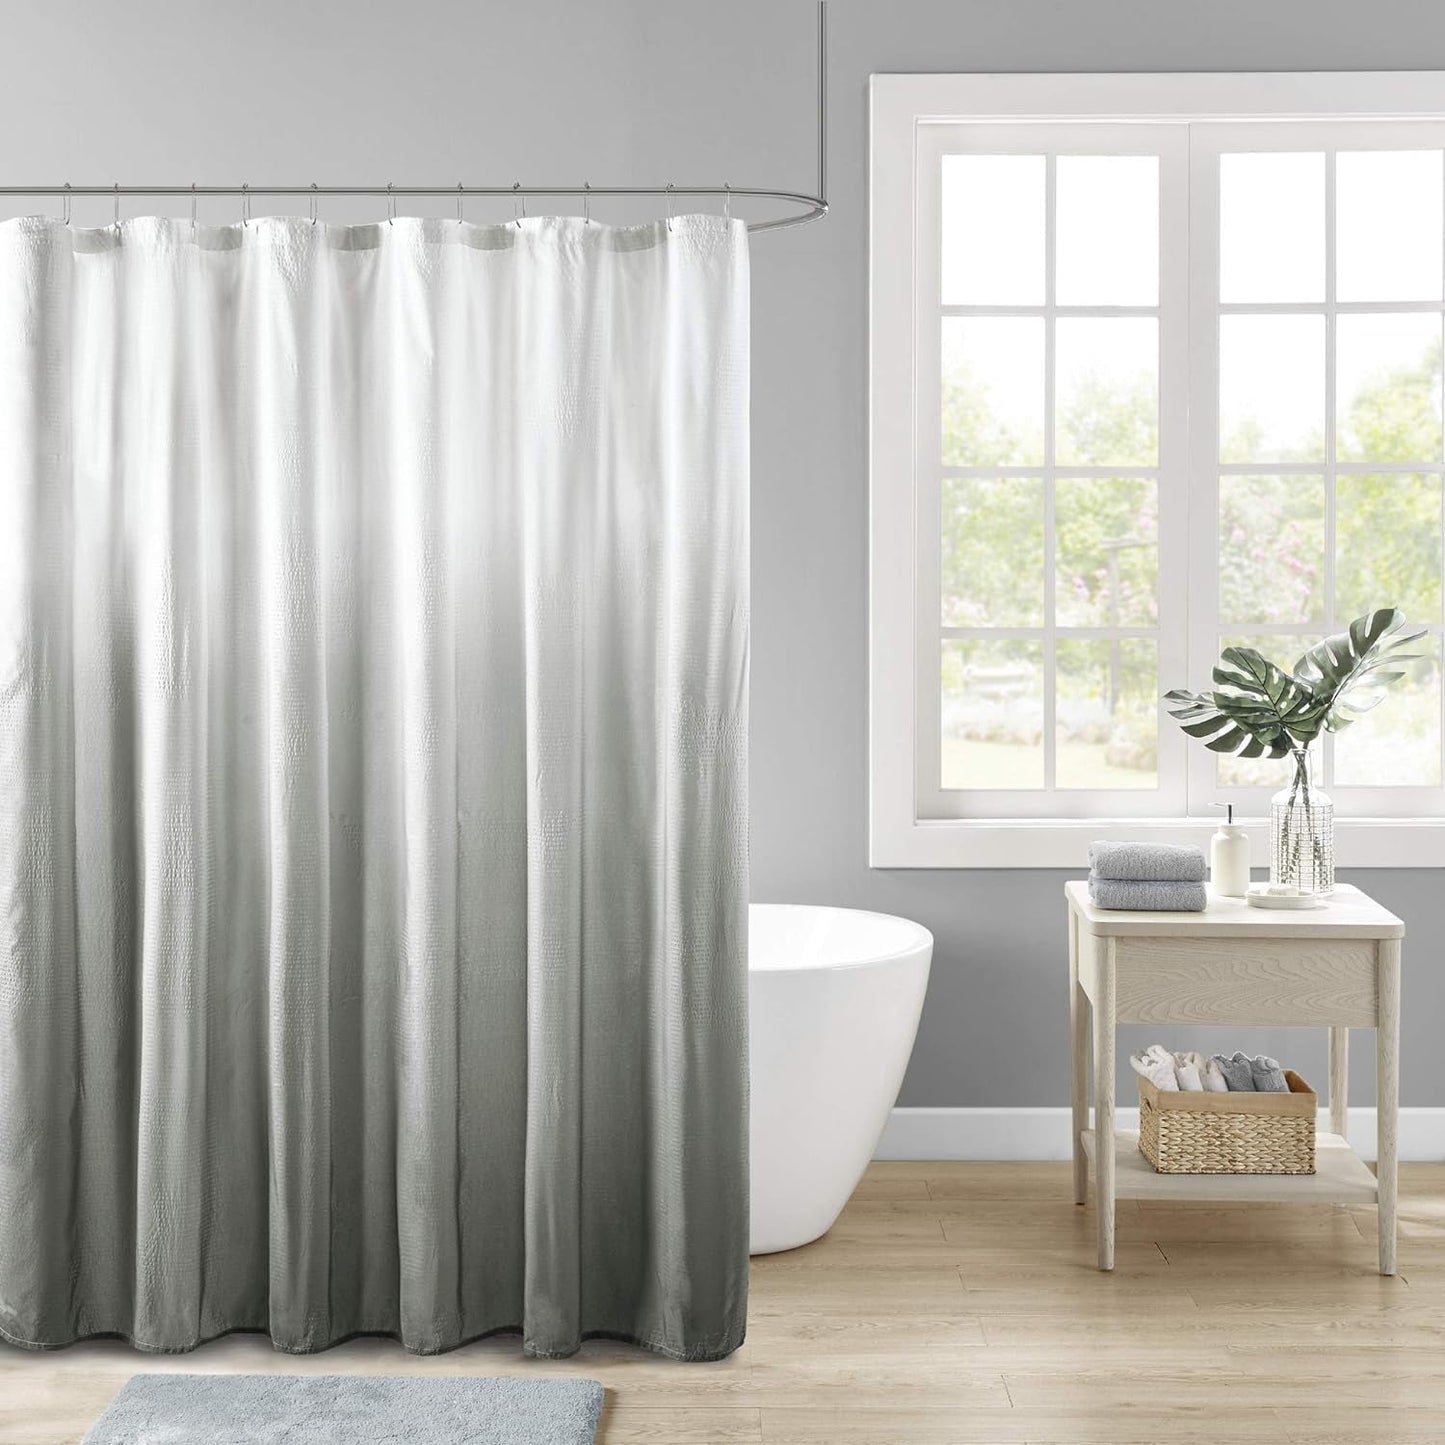 Madison Park Ara Shower Curtain, Seersucker Design Ombre Print, Modern Bathroom Decor, Machine Washable, Fabric Privacy Screen, 72X72, Taupe